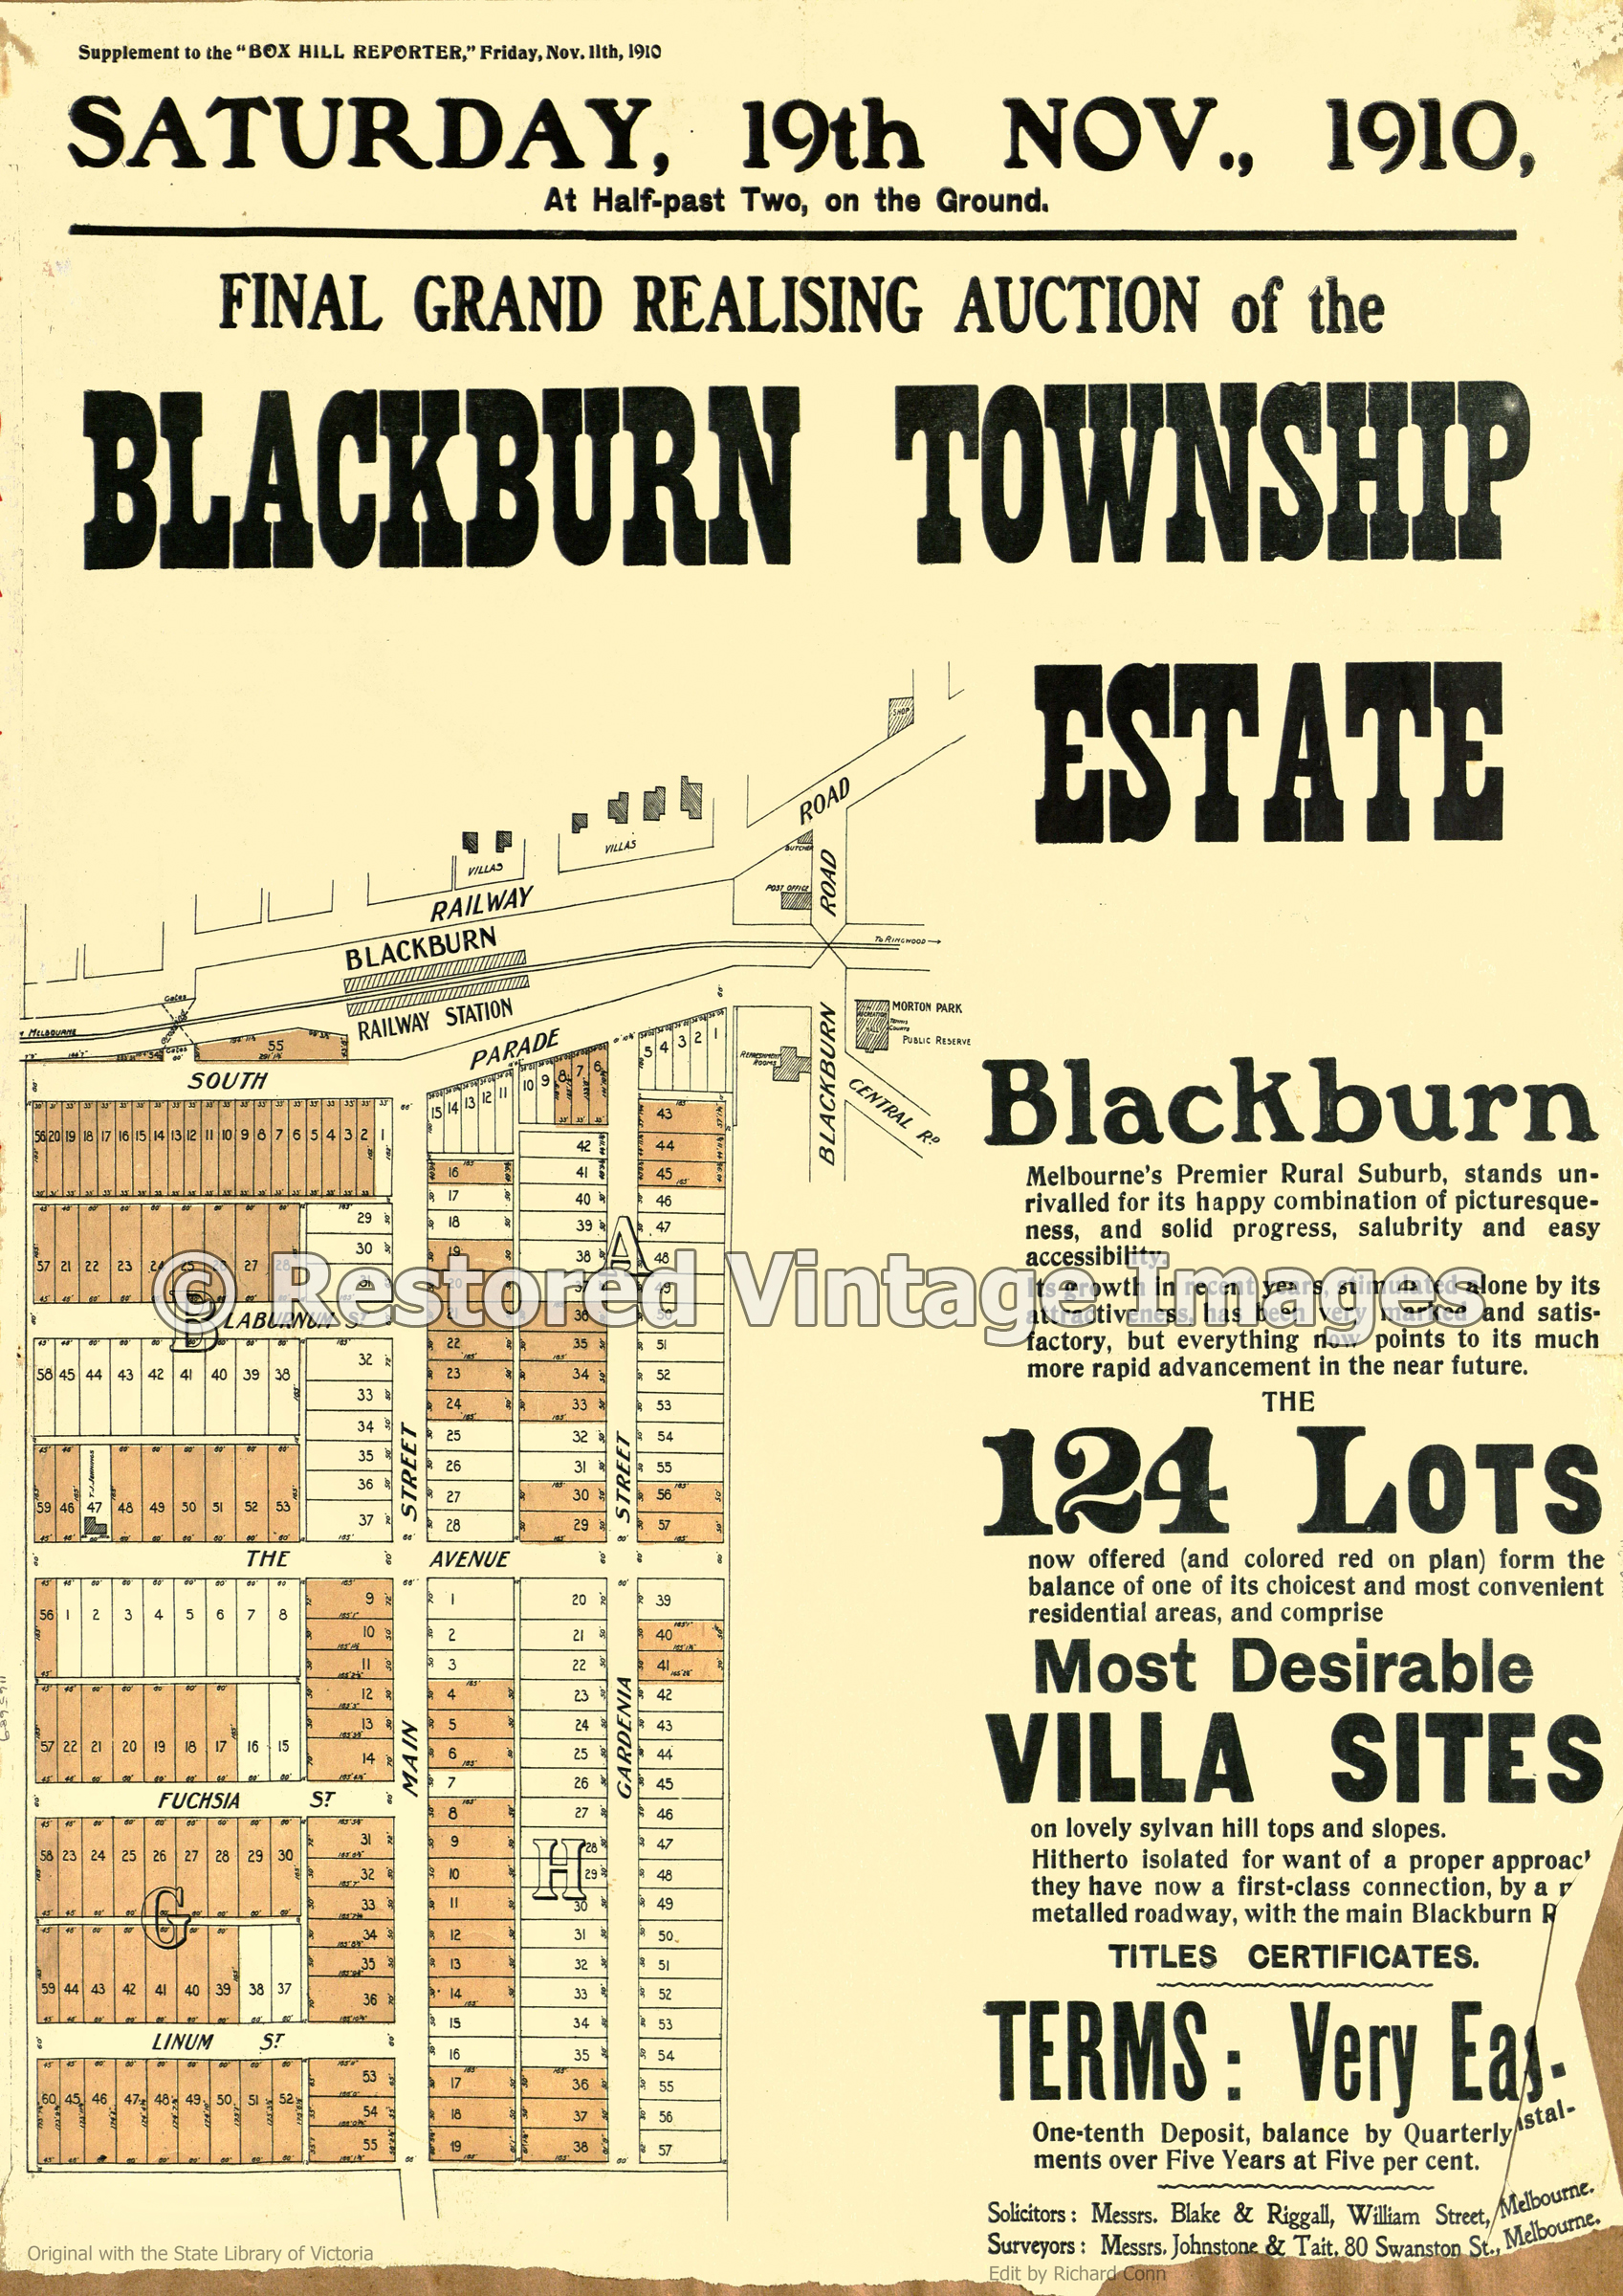 Blackburn Township Estate 19th November 1910 – Blackburn